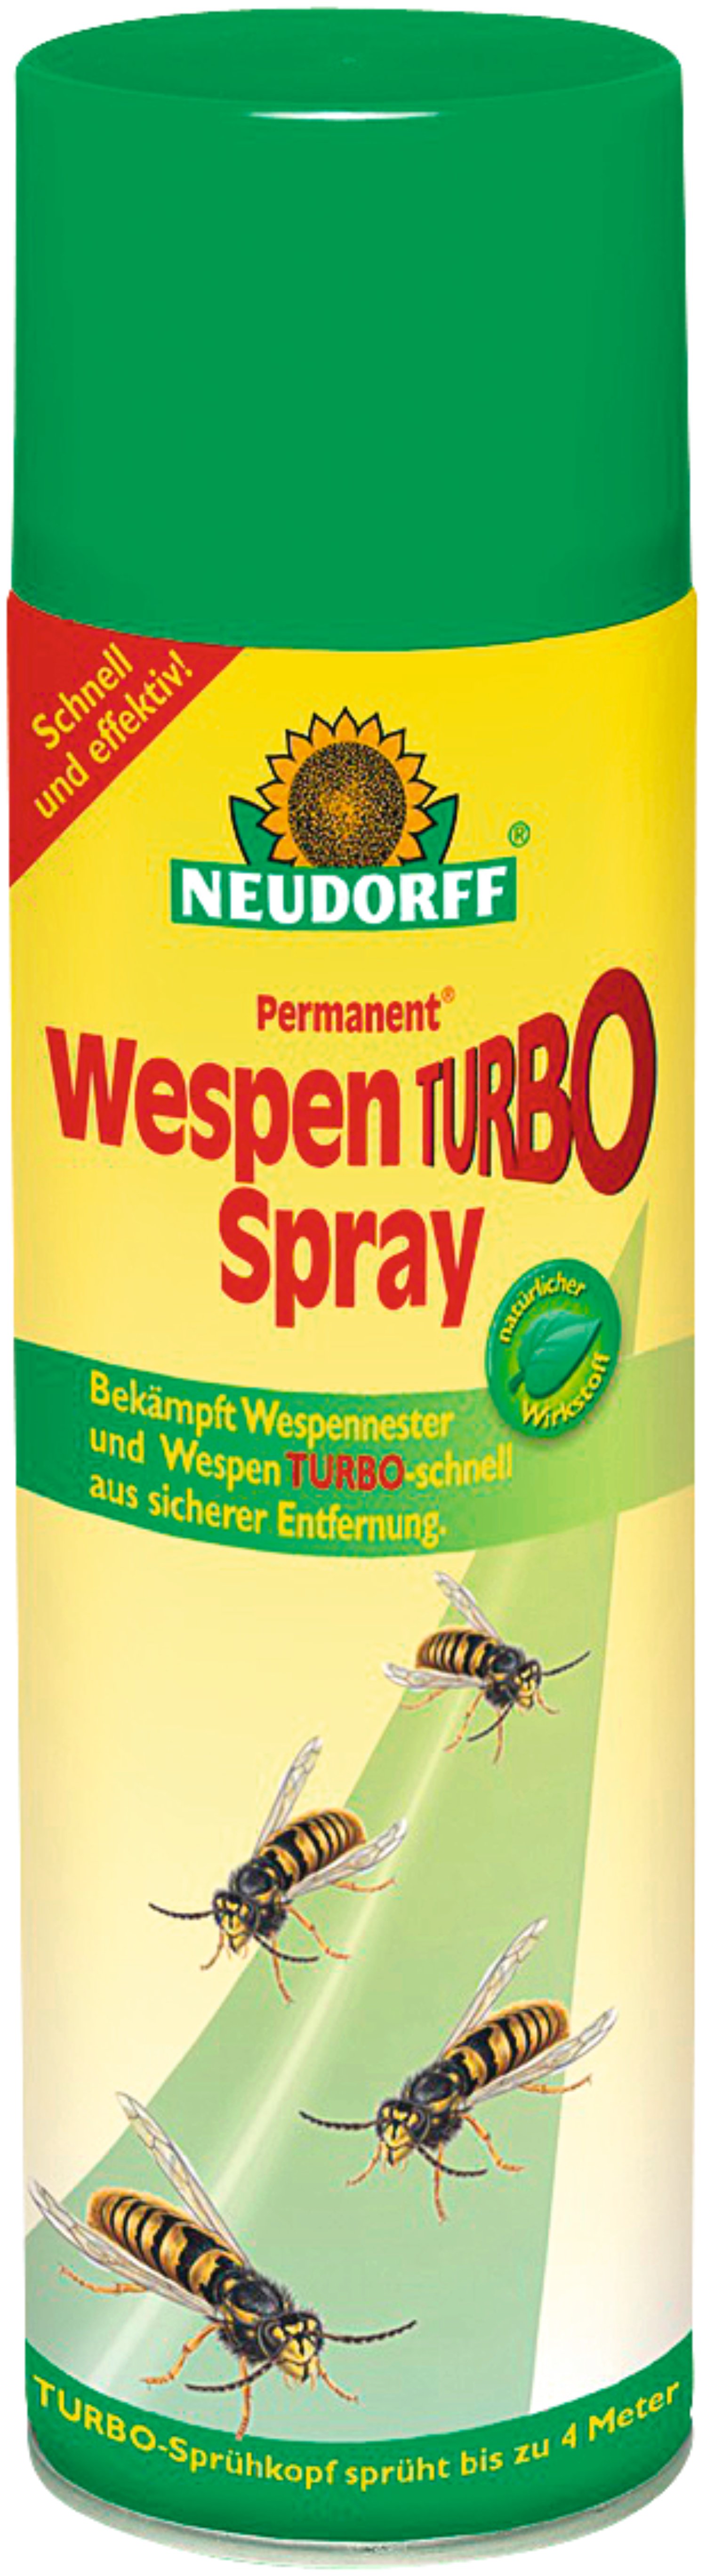 NEUDORFF® Permanent WespenTURBOSpray 500 ml